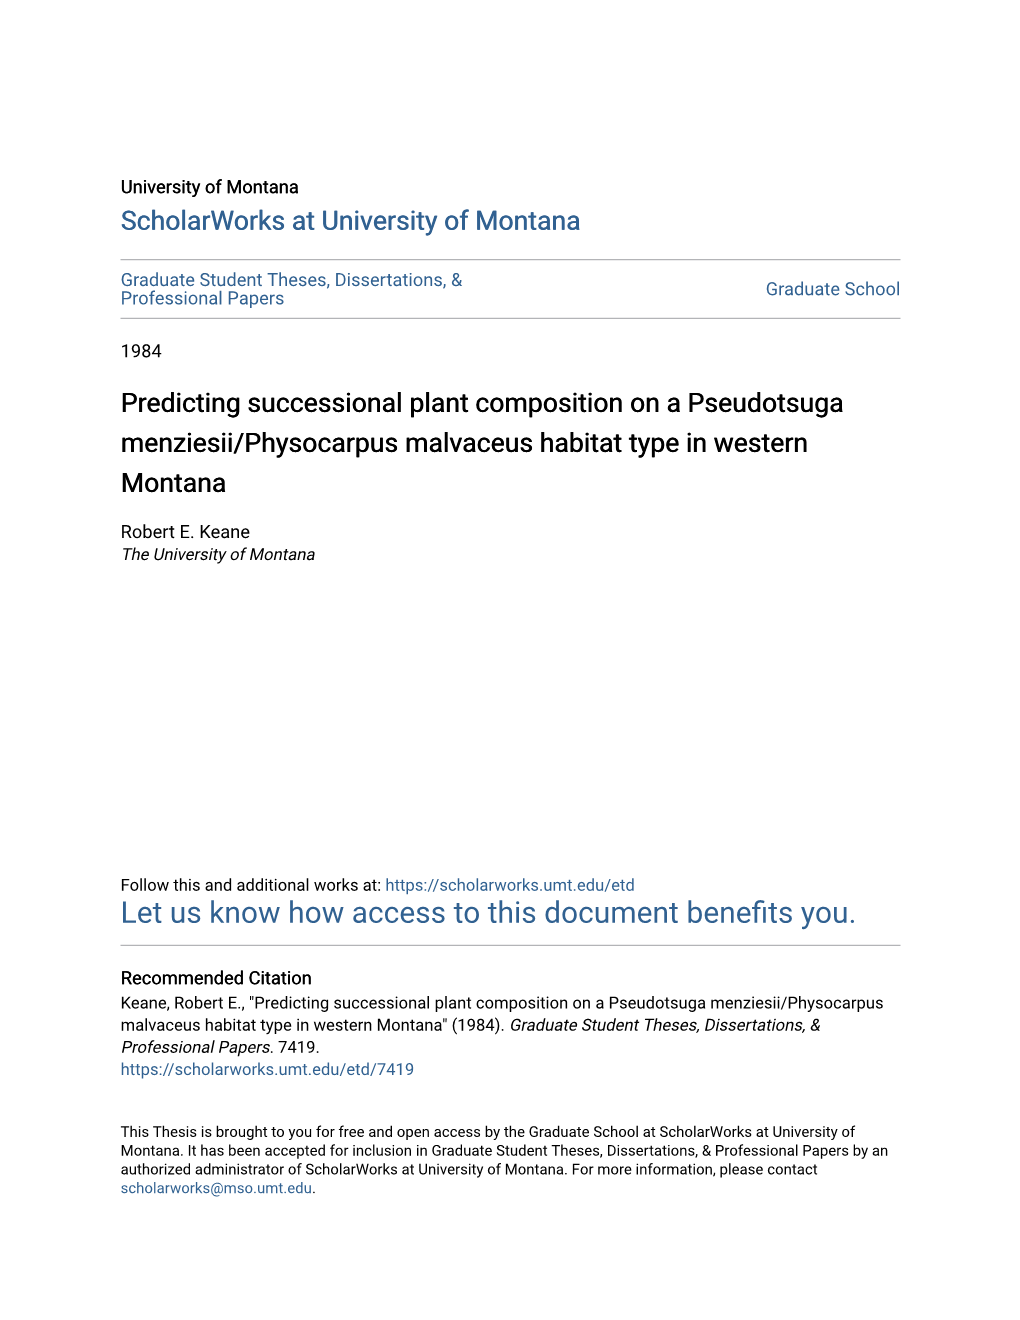 Predicting Successional Plant Composition on a Pseudotsuga Menziesii/Physocarpus Malvaceus Habitat Type in Western Montana